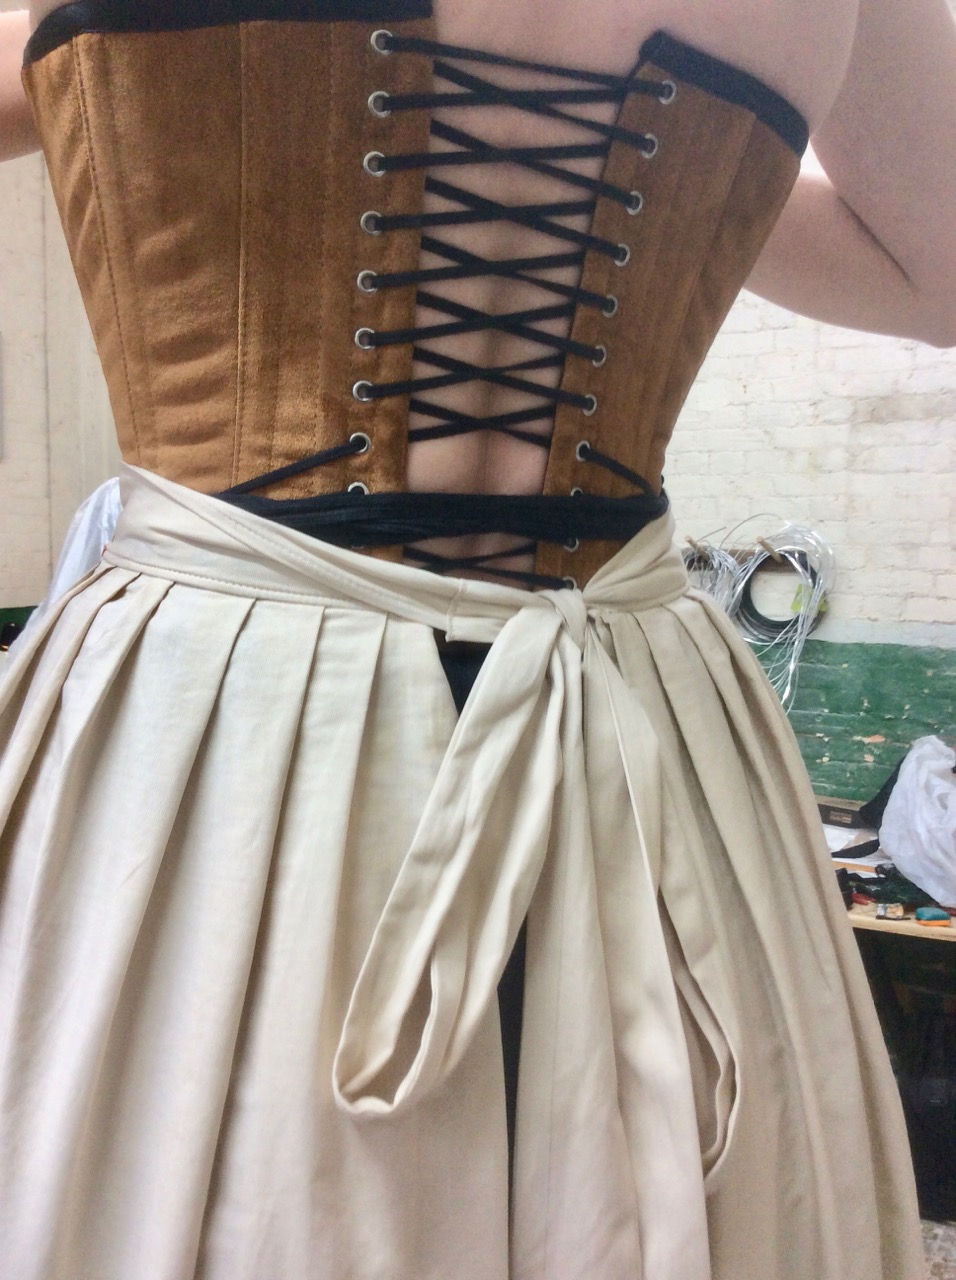 Rosie wearing the corset